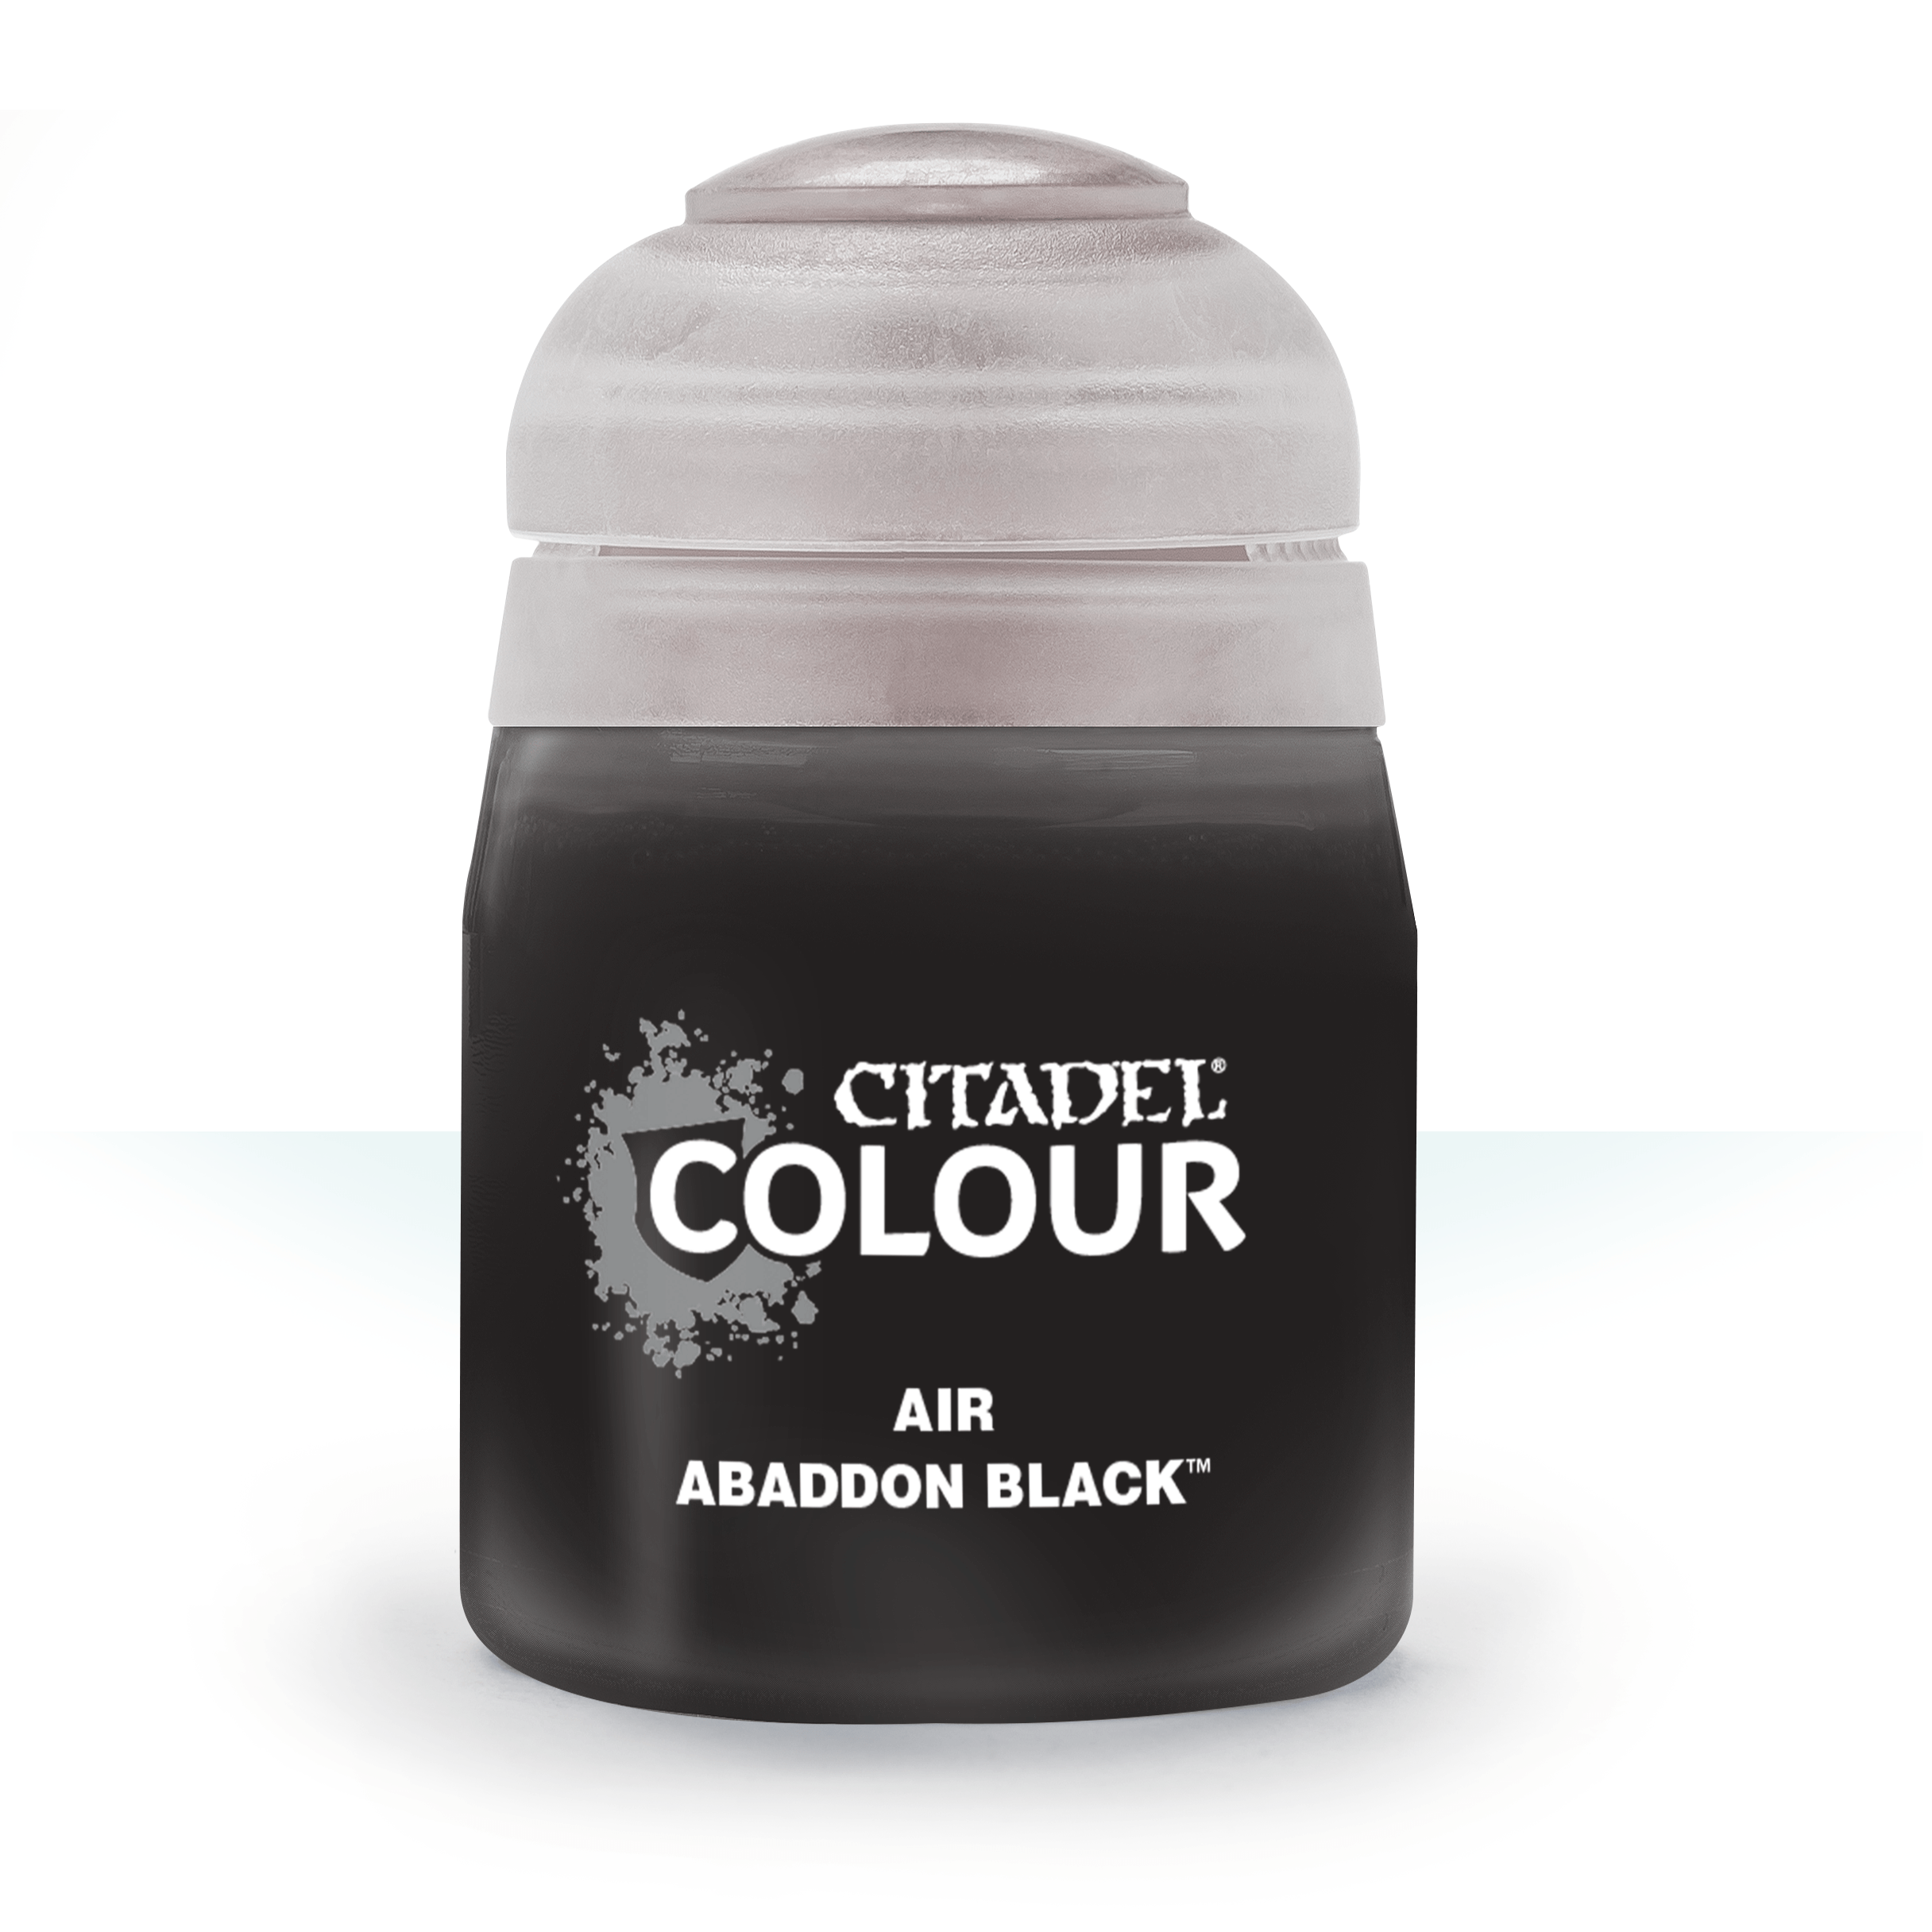 Abaddon Black - Citadel Air Colour